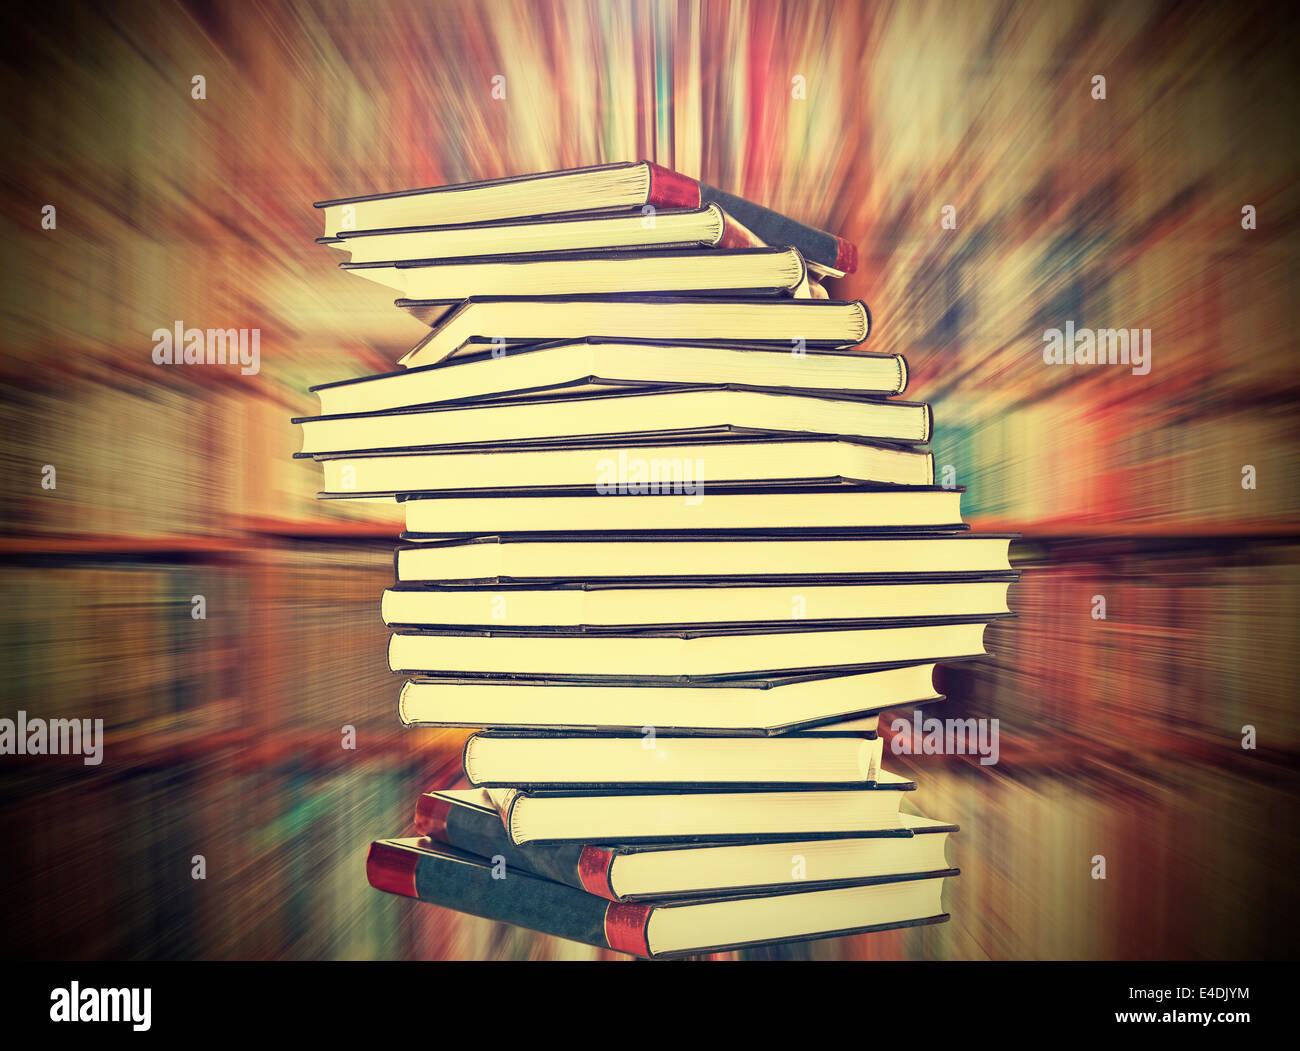 Books on blured bookshelf background, vintage style Stock Photo - Alamy